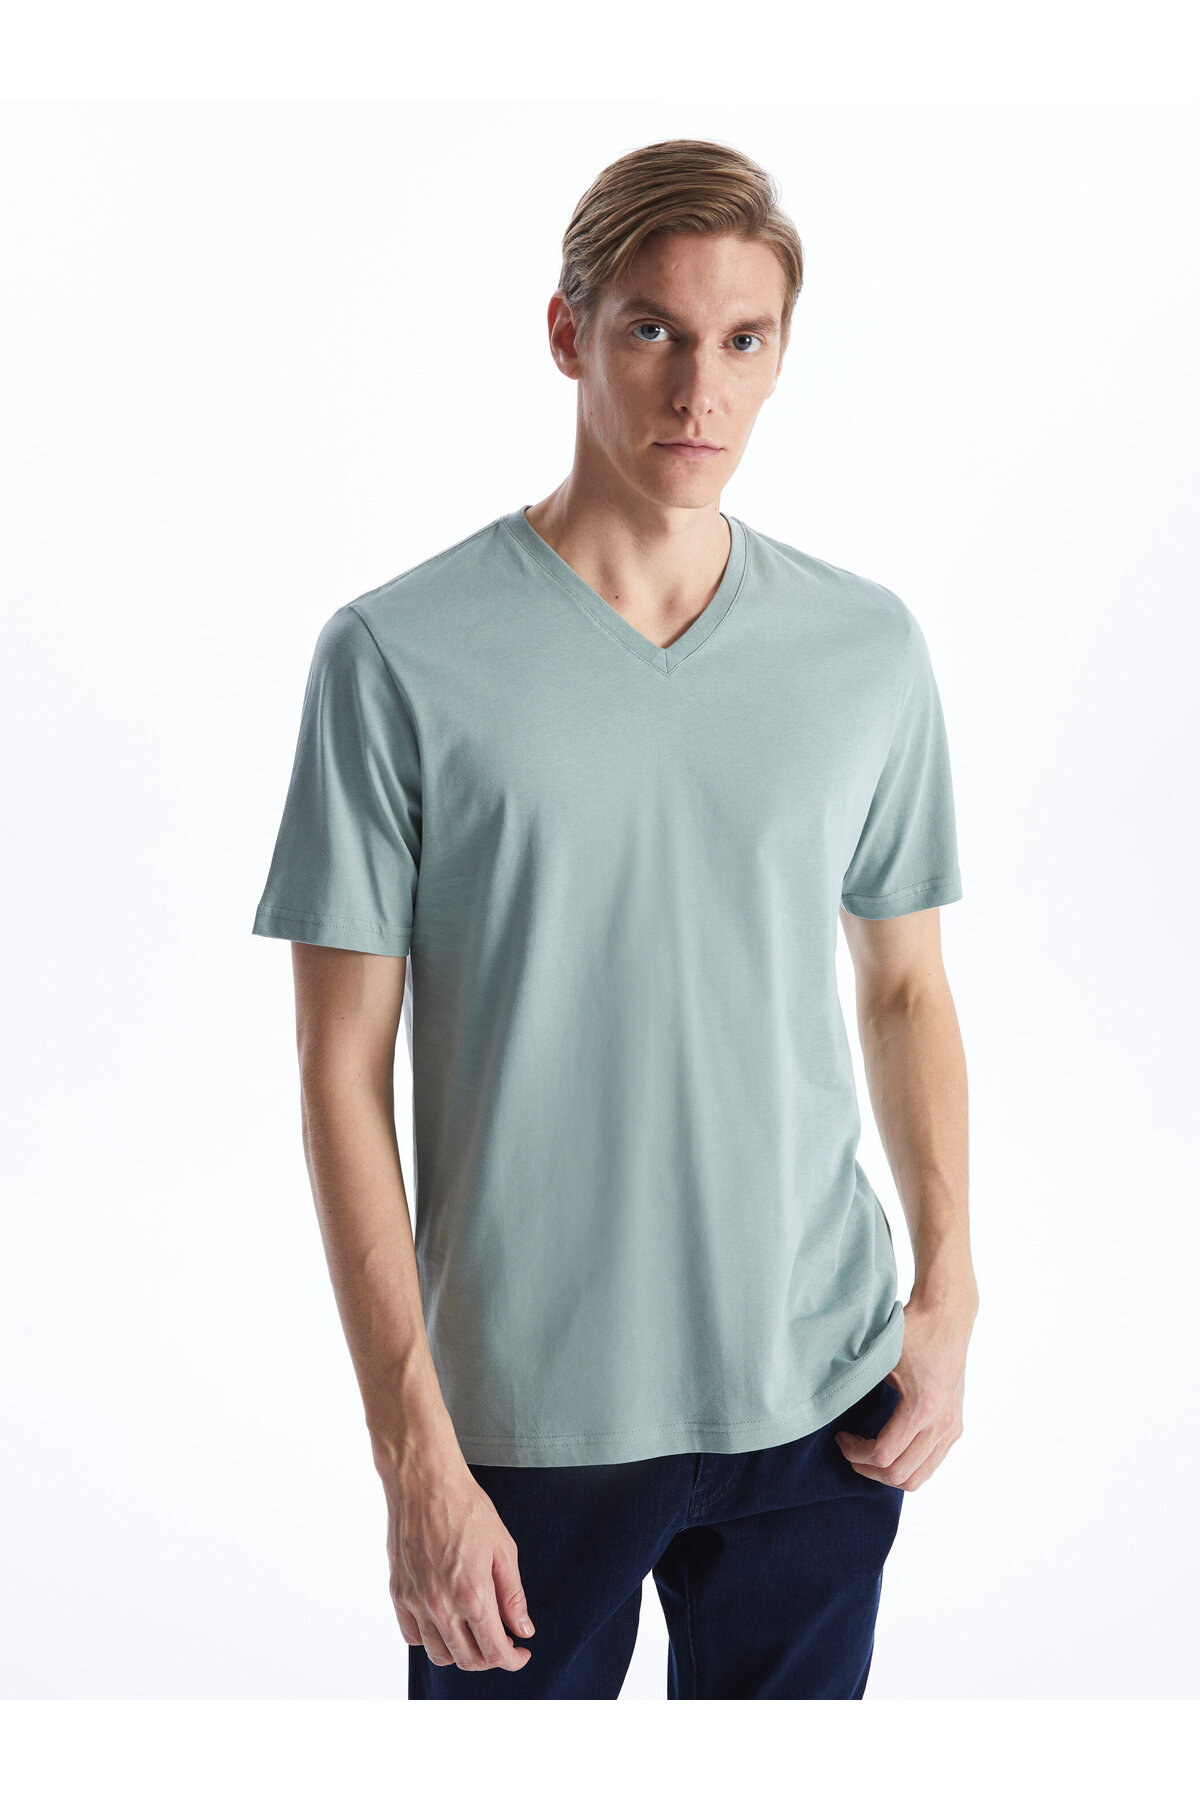 LC Waikiki V-Neck Short Sleeve Men's T-Shirt